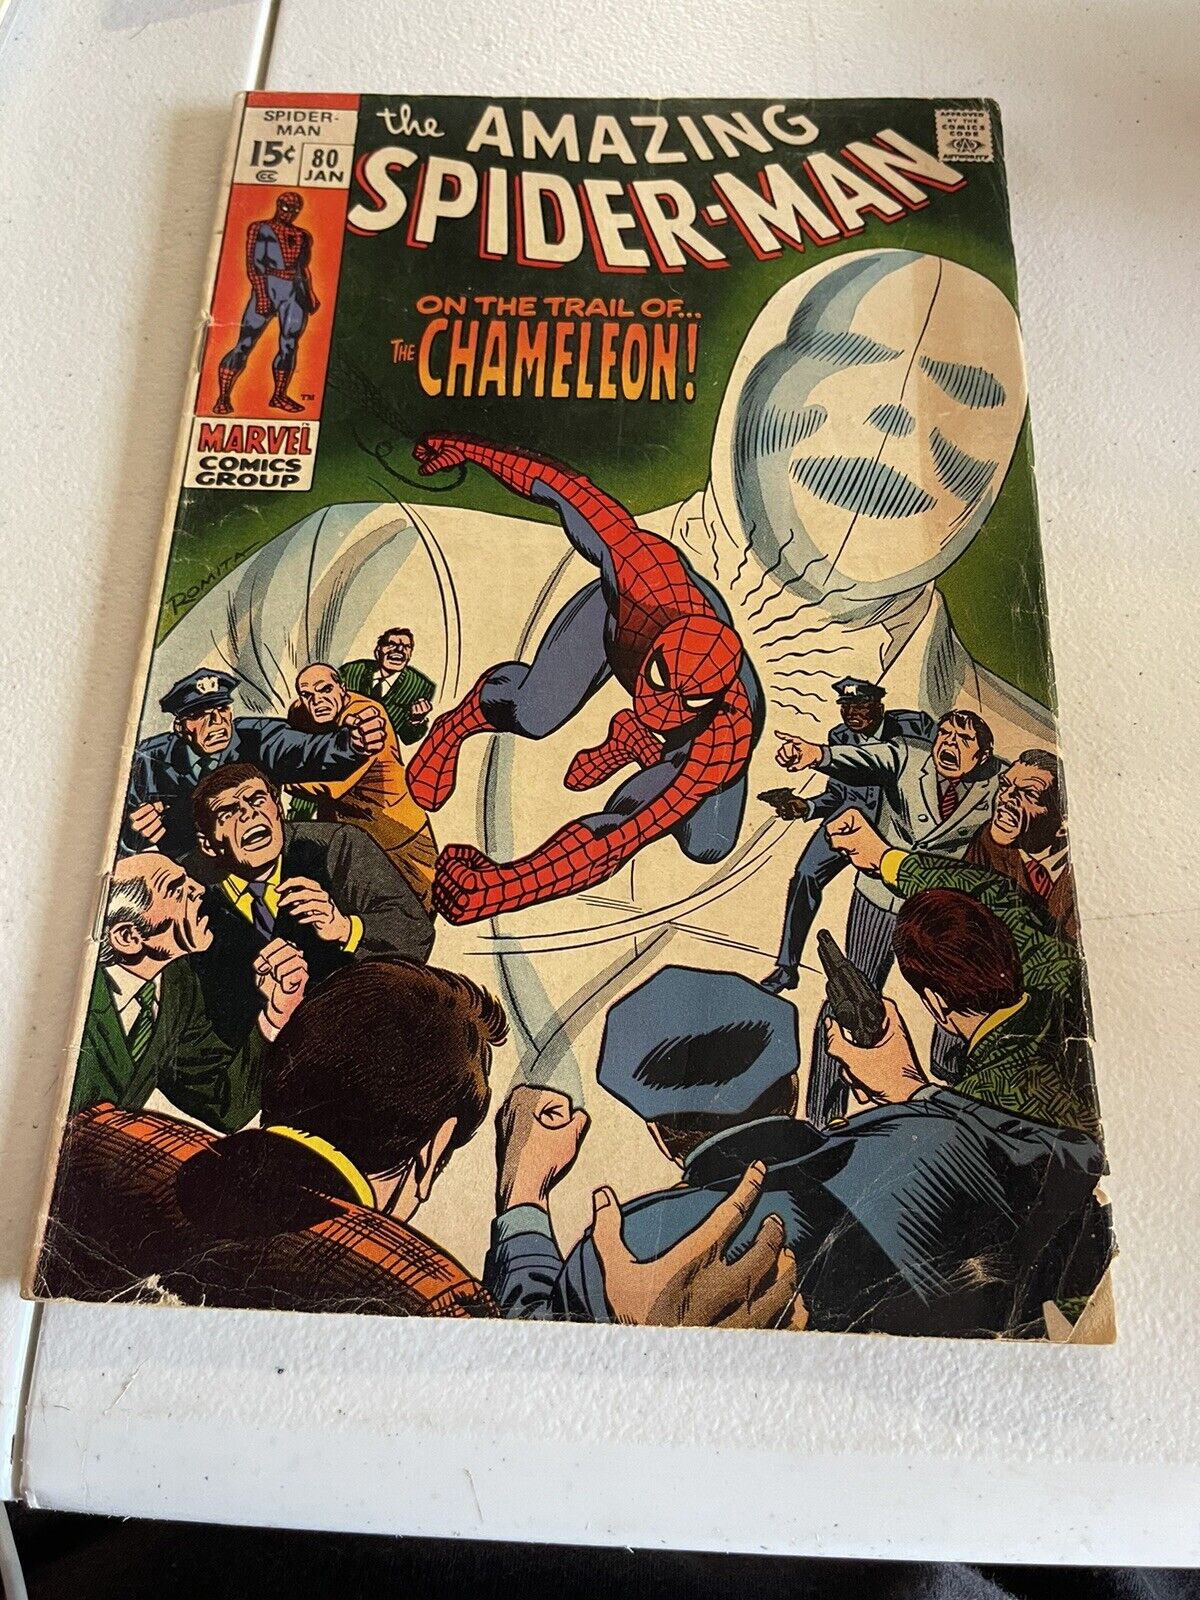 The Amazing Spider-Man #80 (Marvel Comics January 1970)